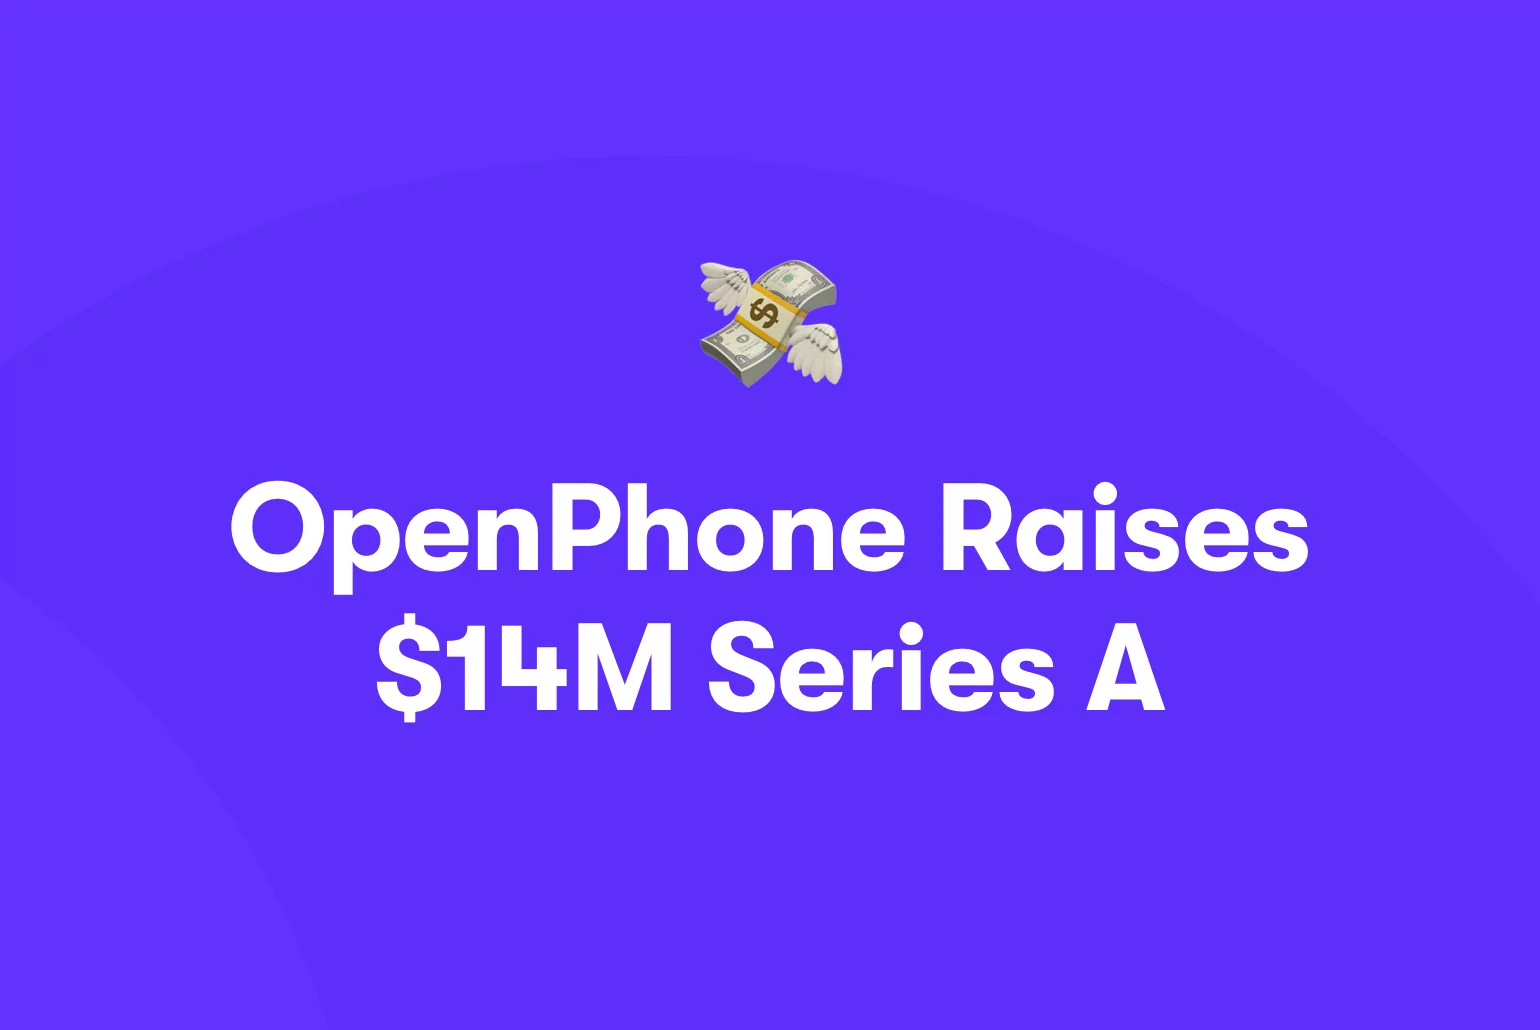 OpenPhone raises Series A